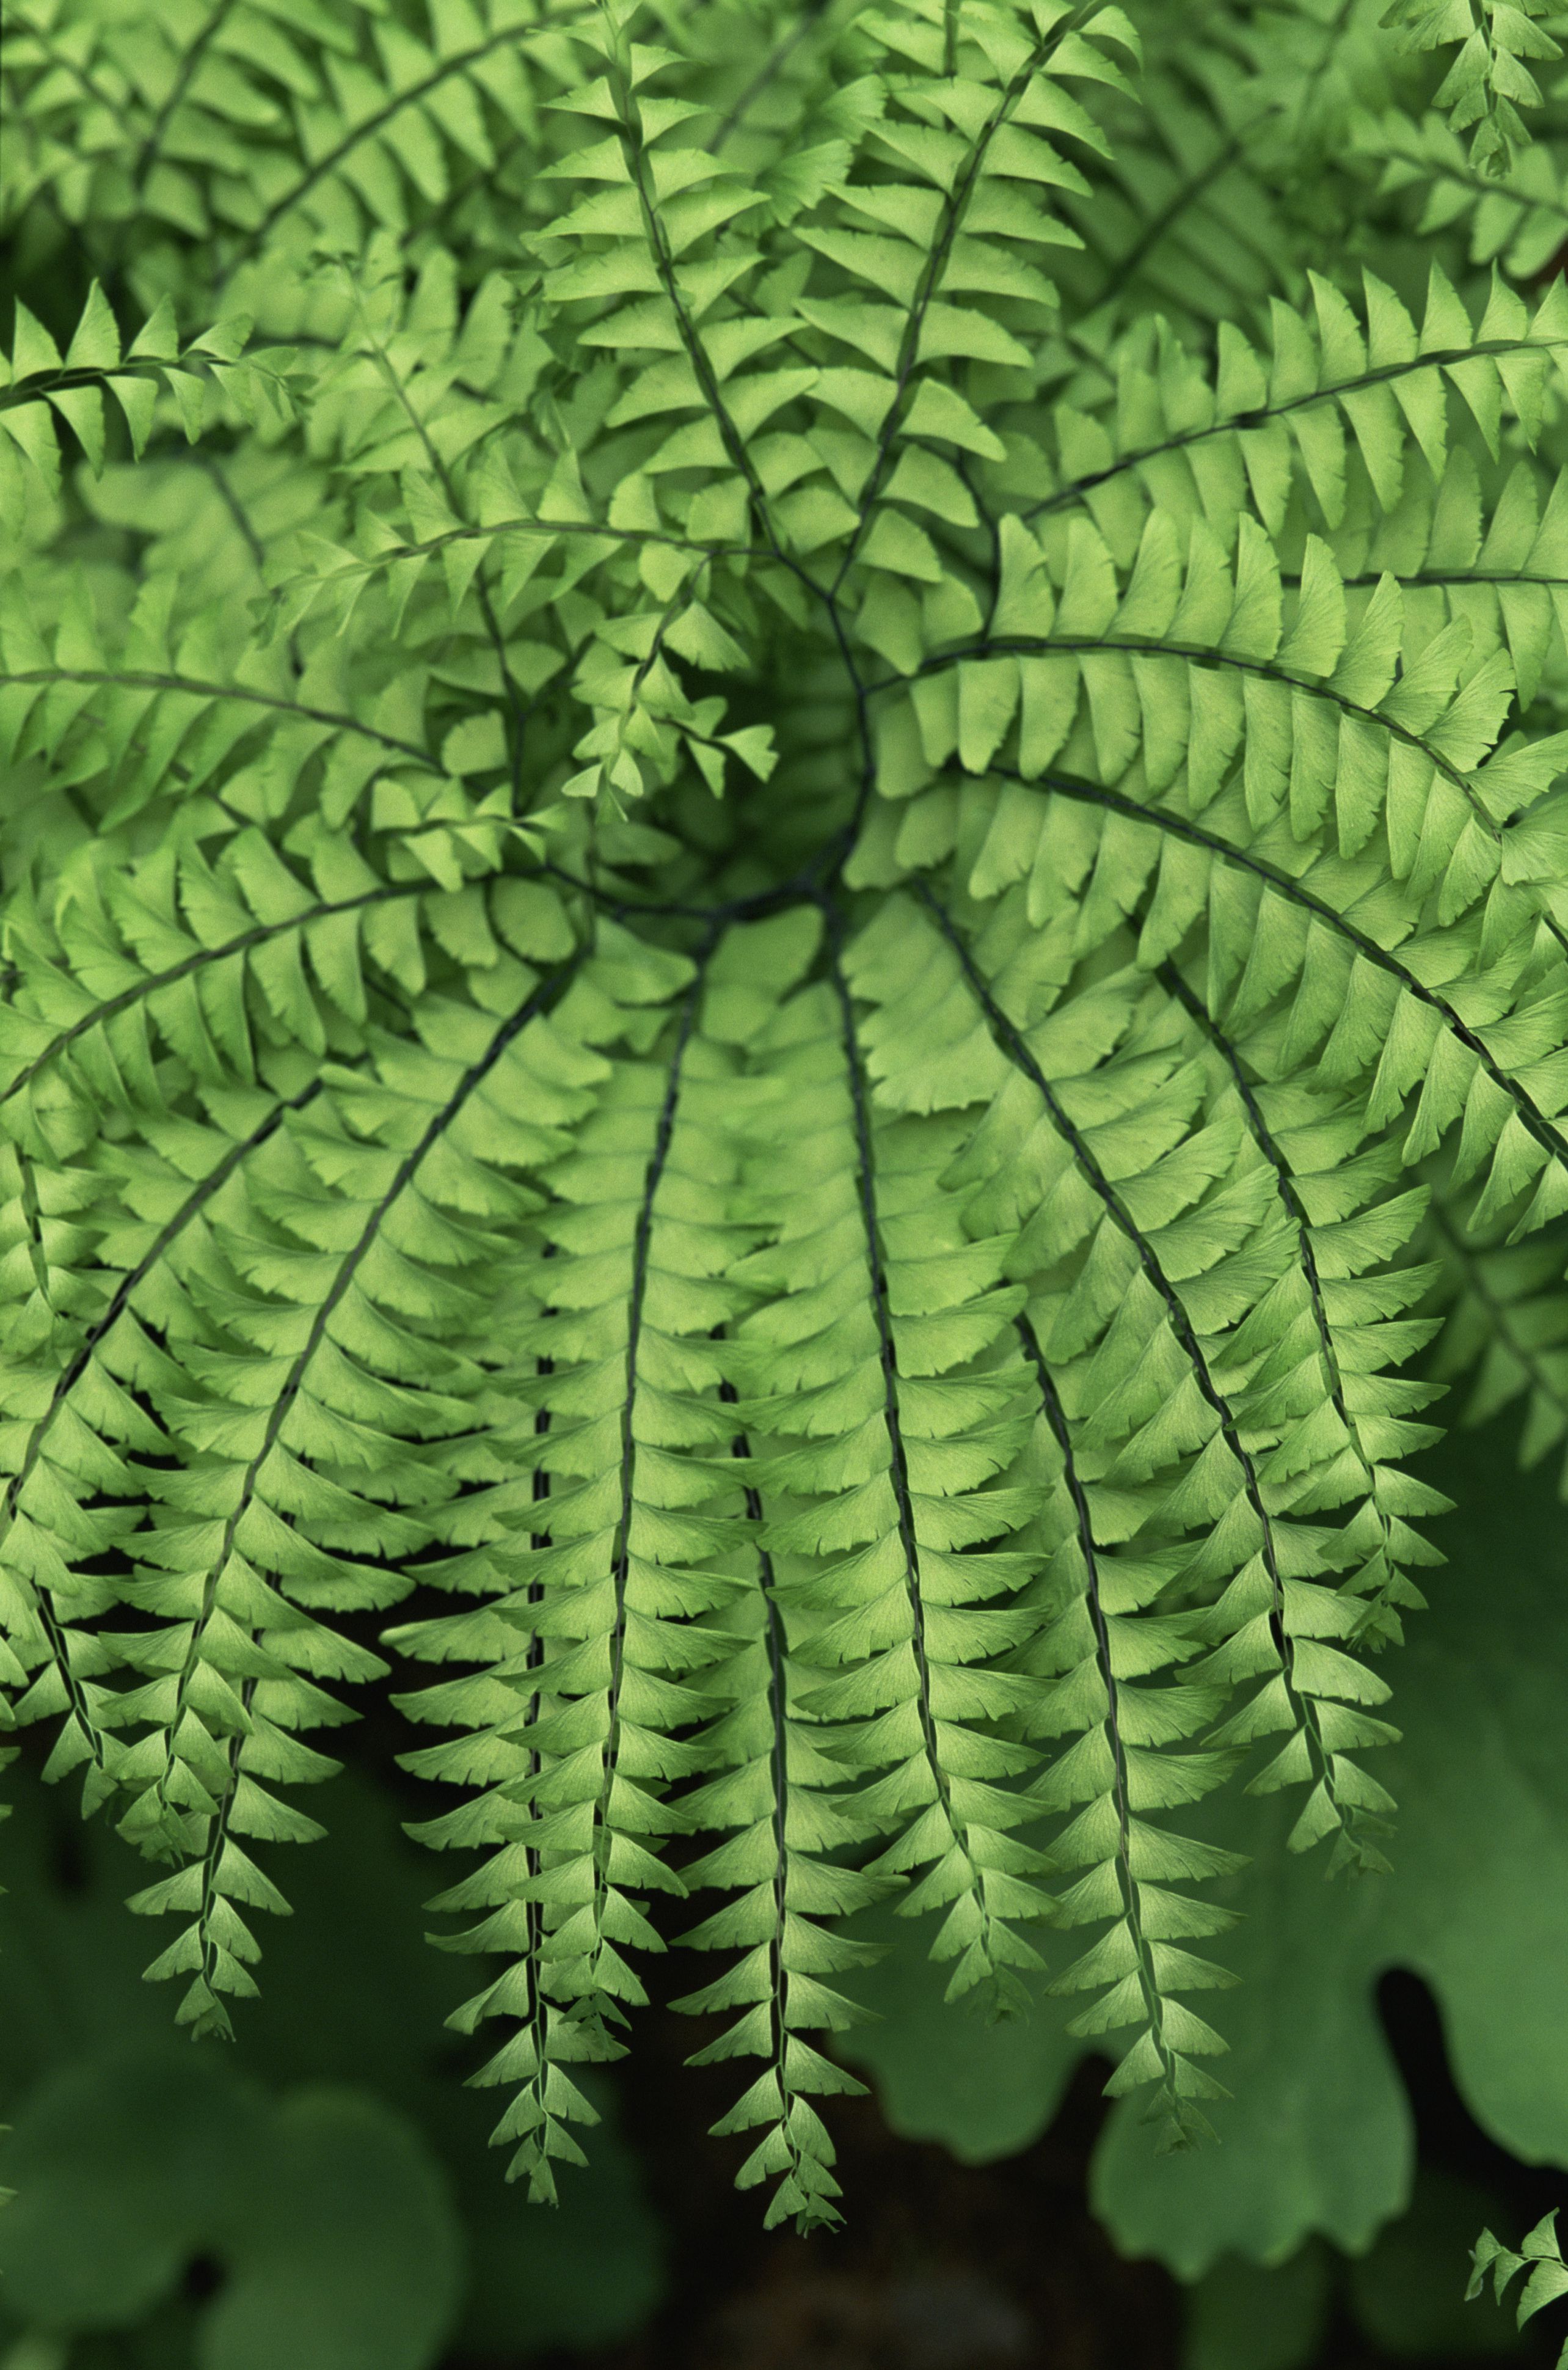 Tips for Growing Maidenhair (Adiantum) Ferns